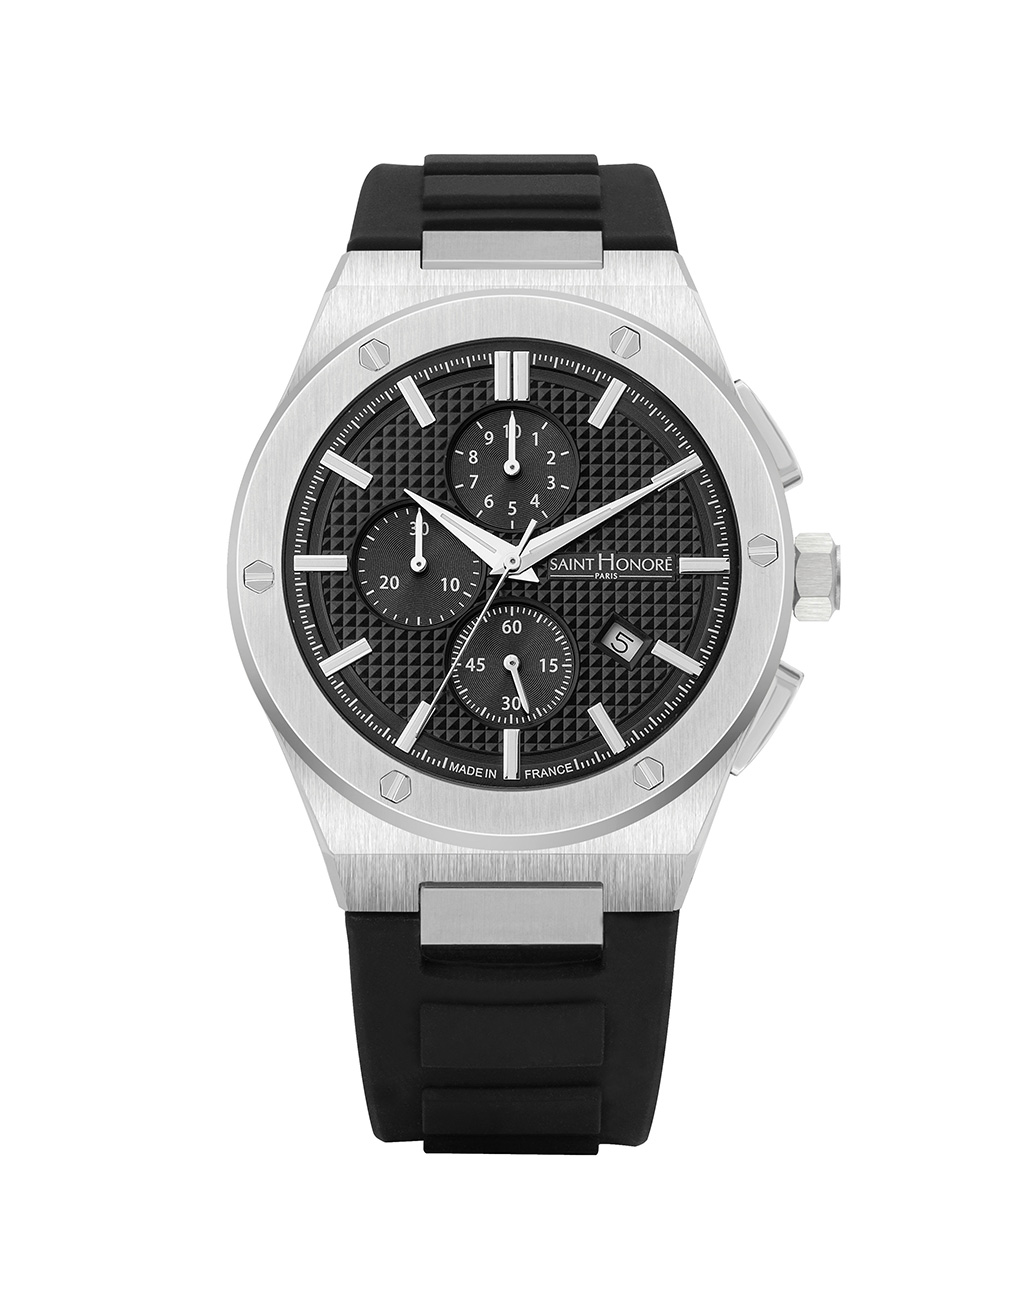 HAUSSMAN II Men's watch - stainless steel, black dial, black silicon strap